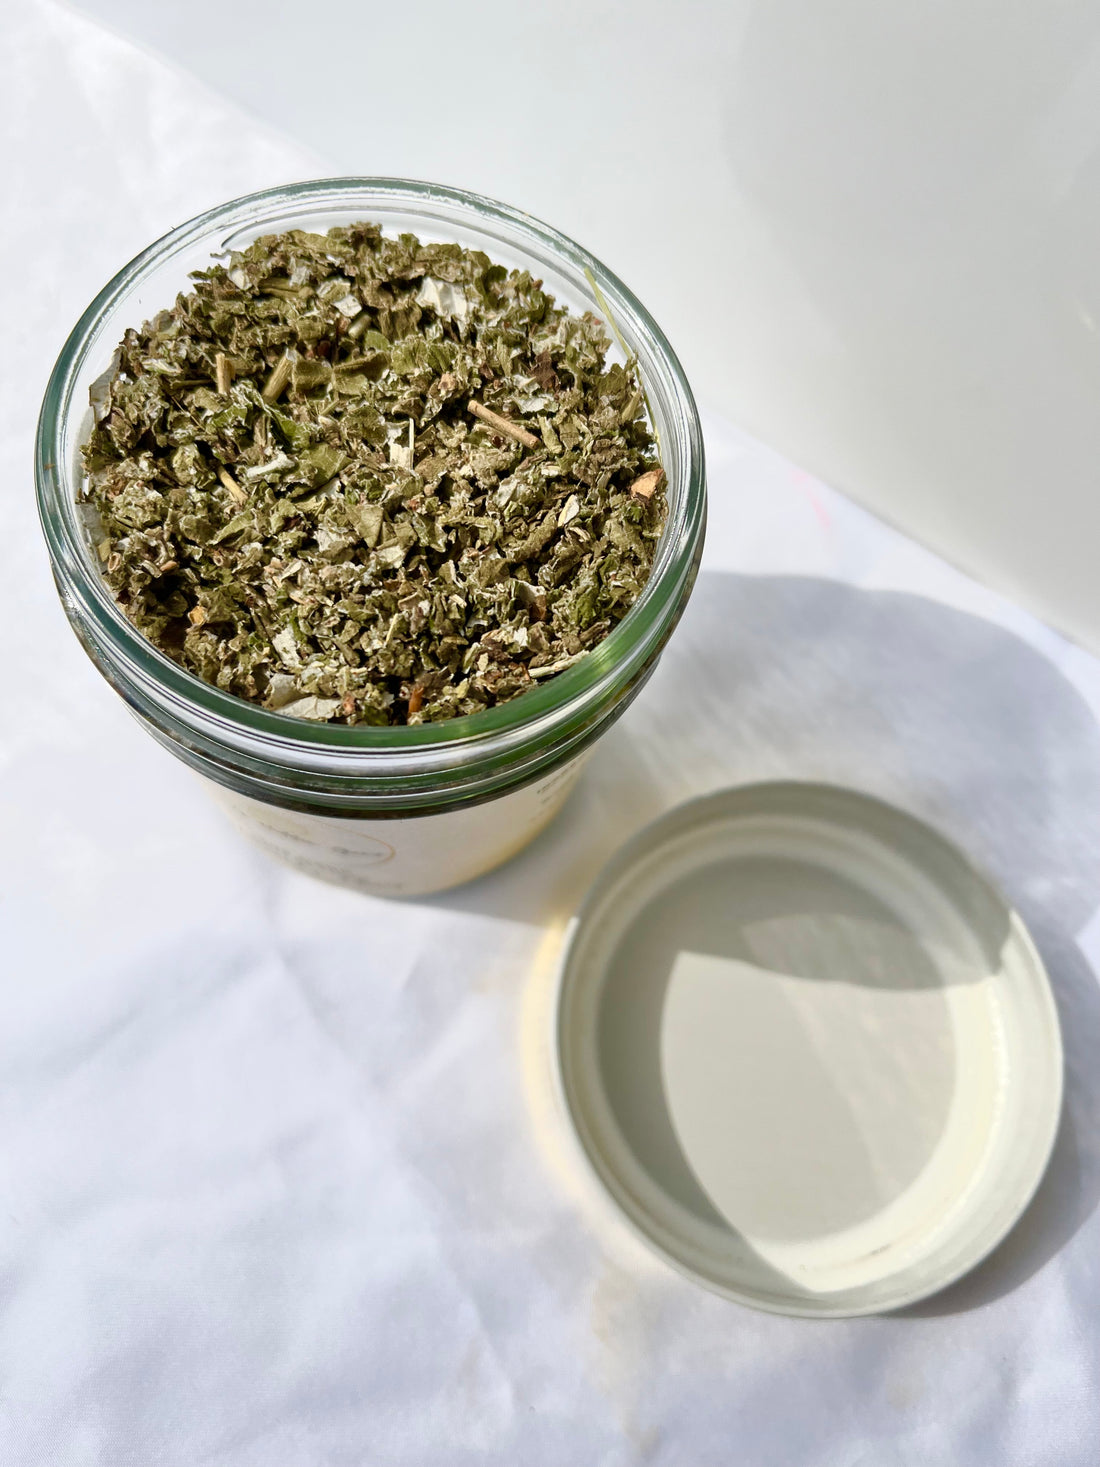 How Do I Prep Herbal Teas?